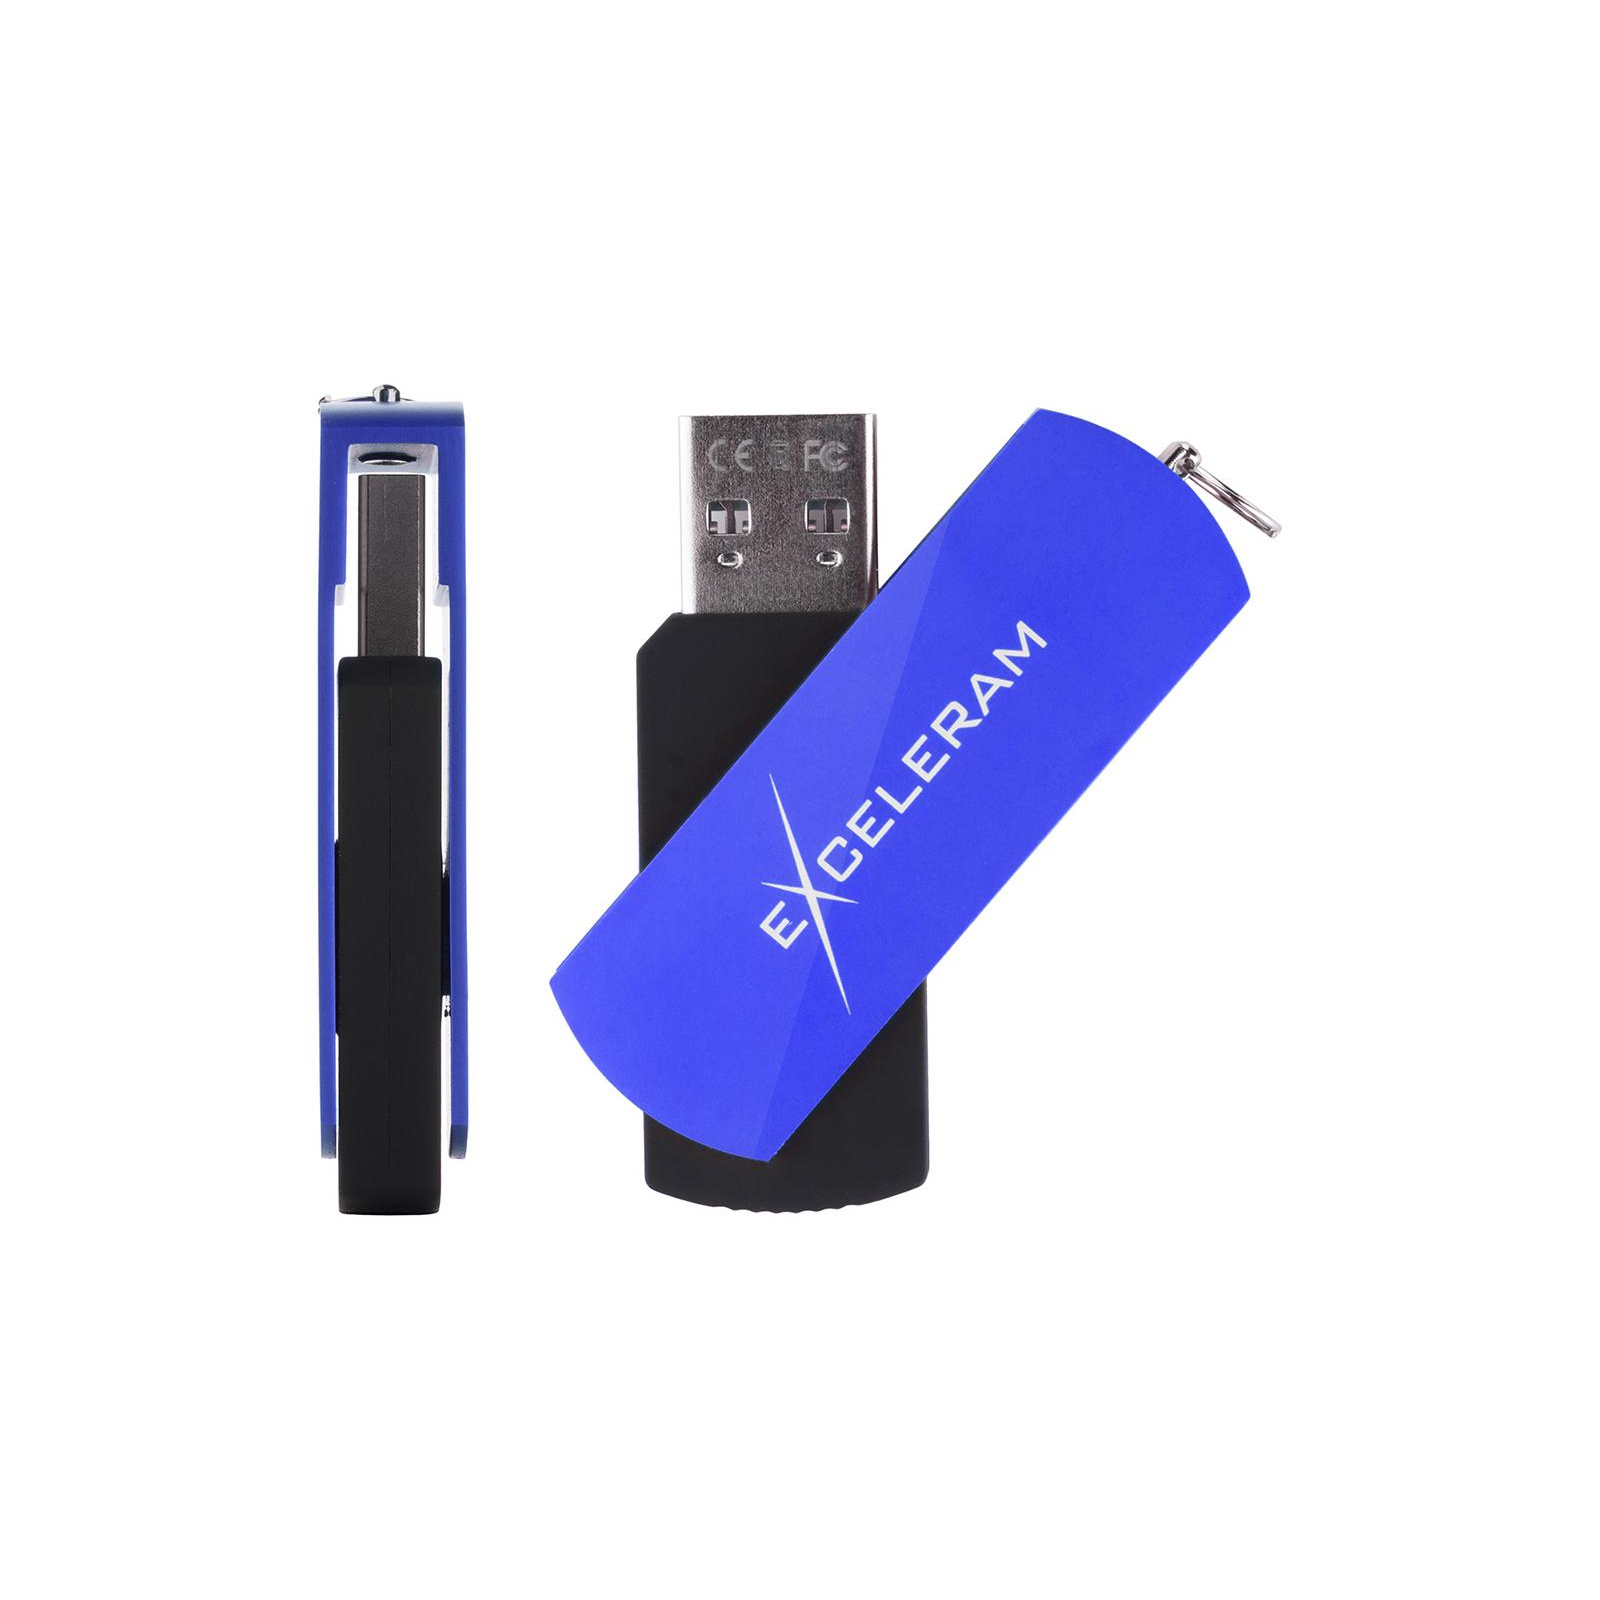 USB флеш накопитель eXceleram 64GB P2 Series Green/Black USB 2.0 (EXP2U2GRB64) изображение 4